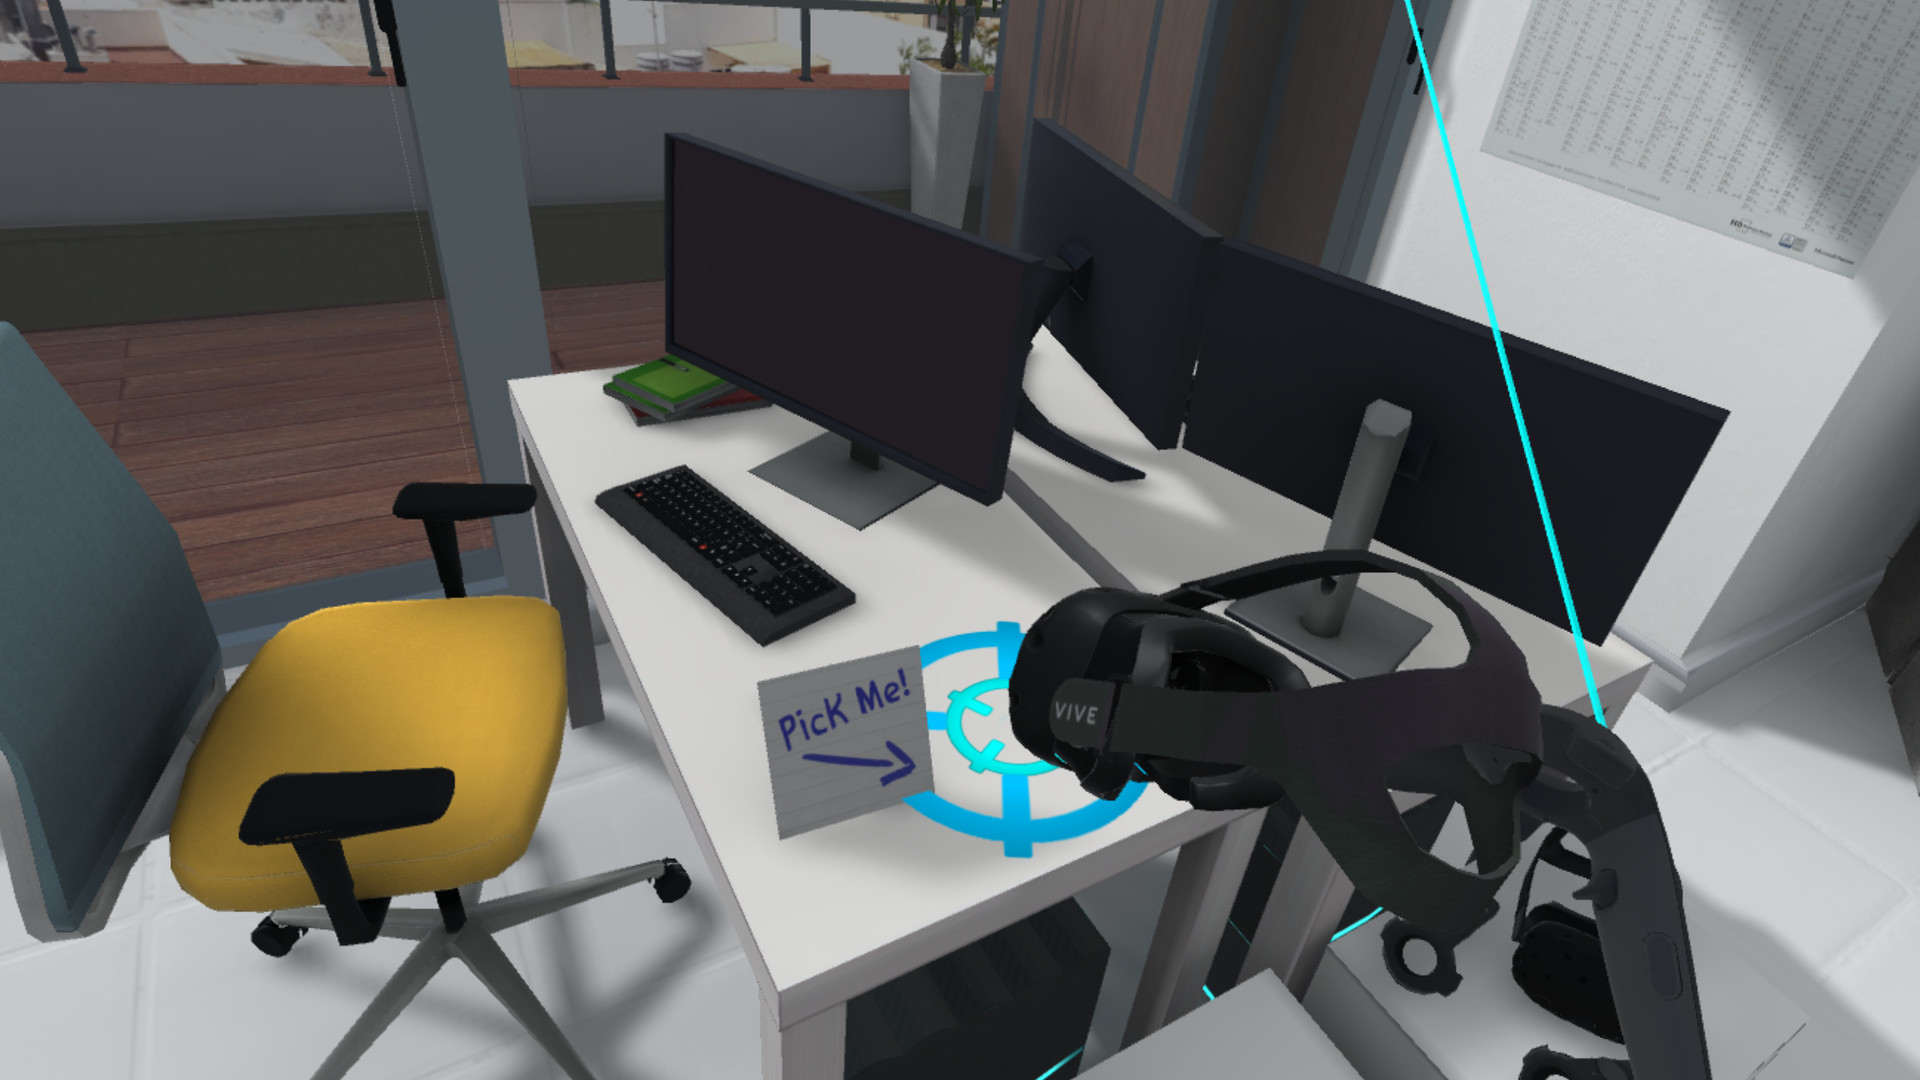 edataconsulting VR Office on Steam